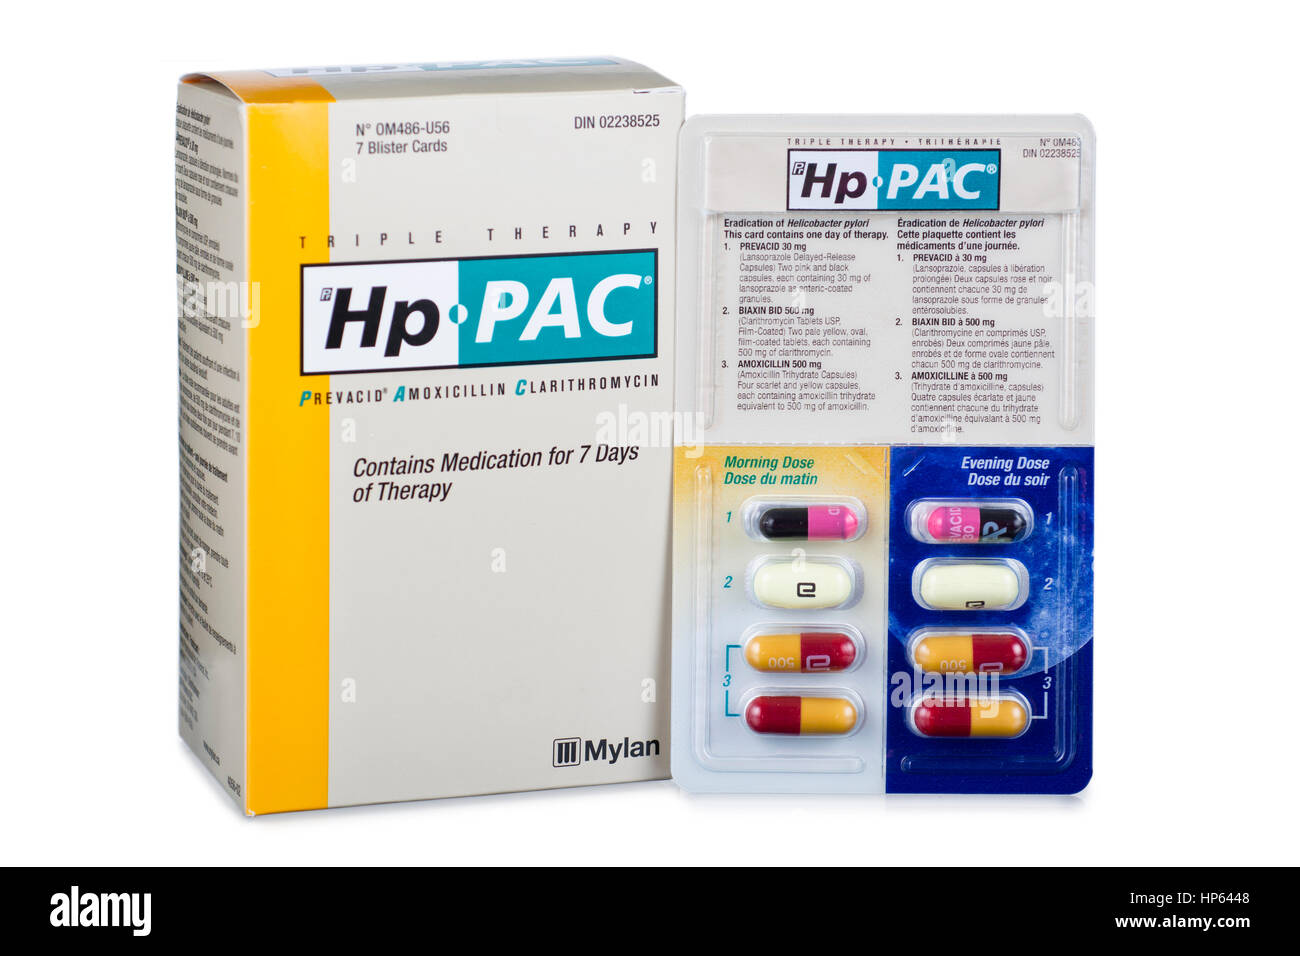 Helicobacter Pylori Behandlung, Antibiotika-Tabletten Kapseln für H.Pylori Stockfoto